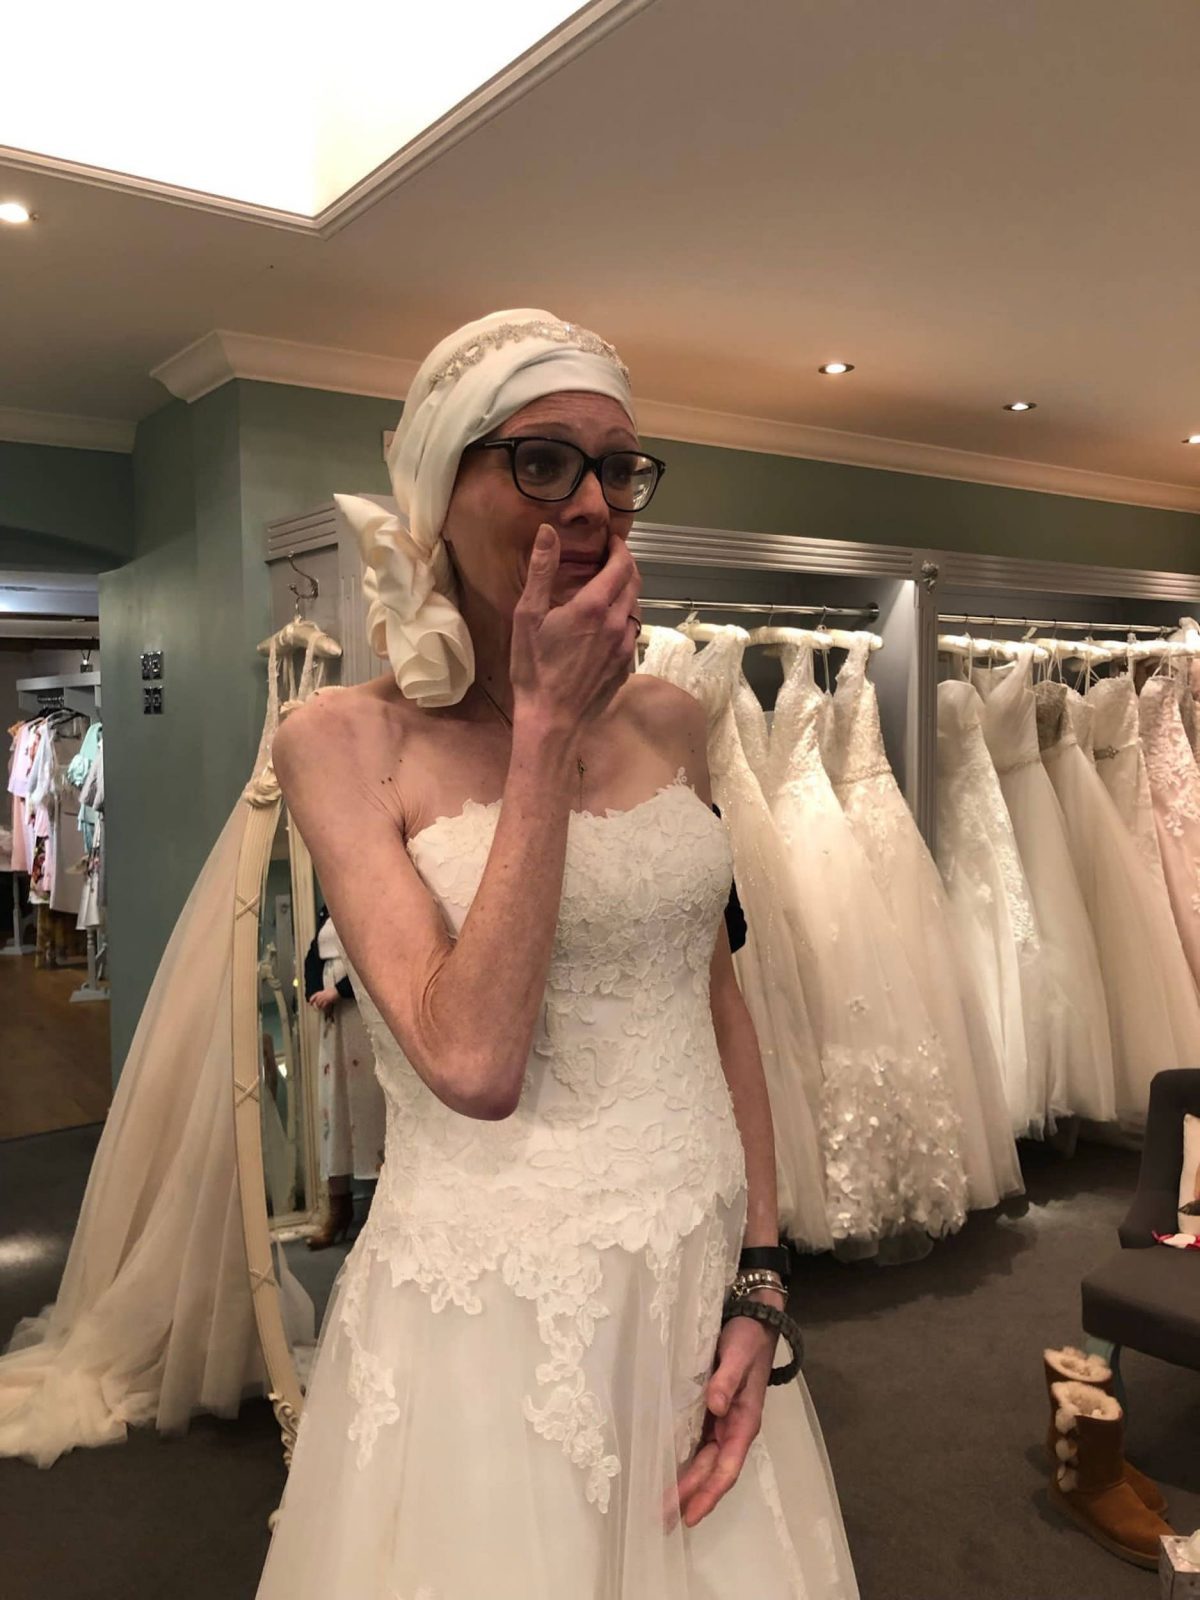 Jen Cooper trying her wedding dress